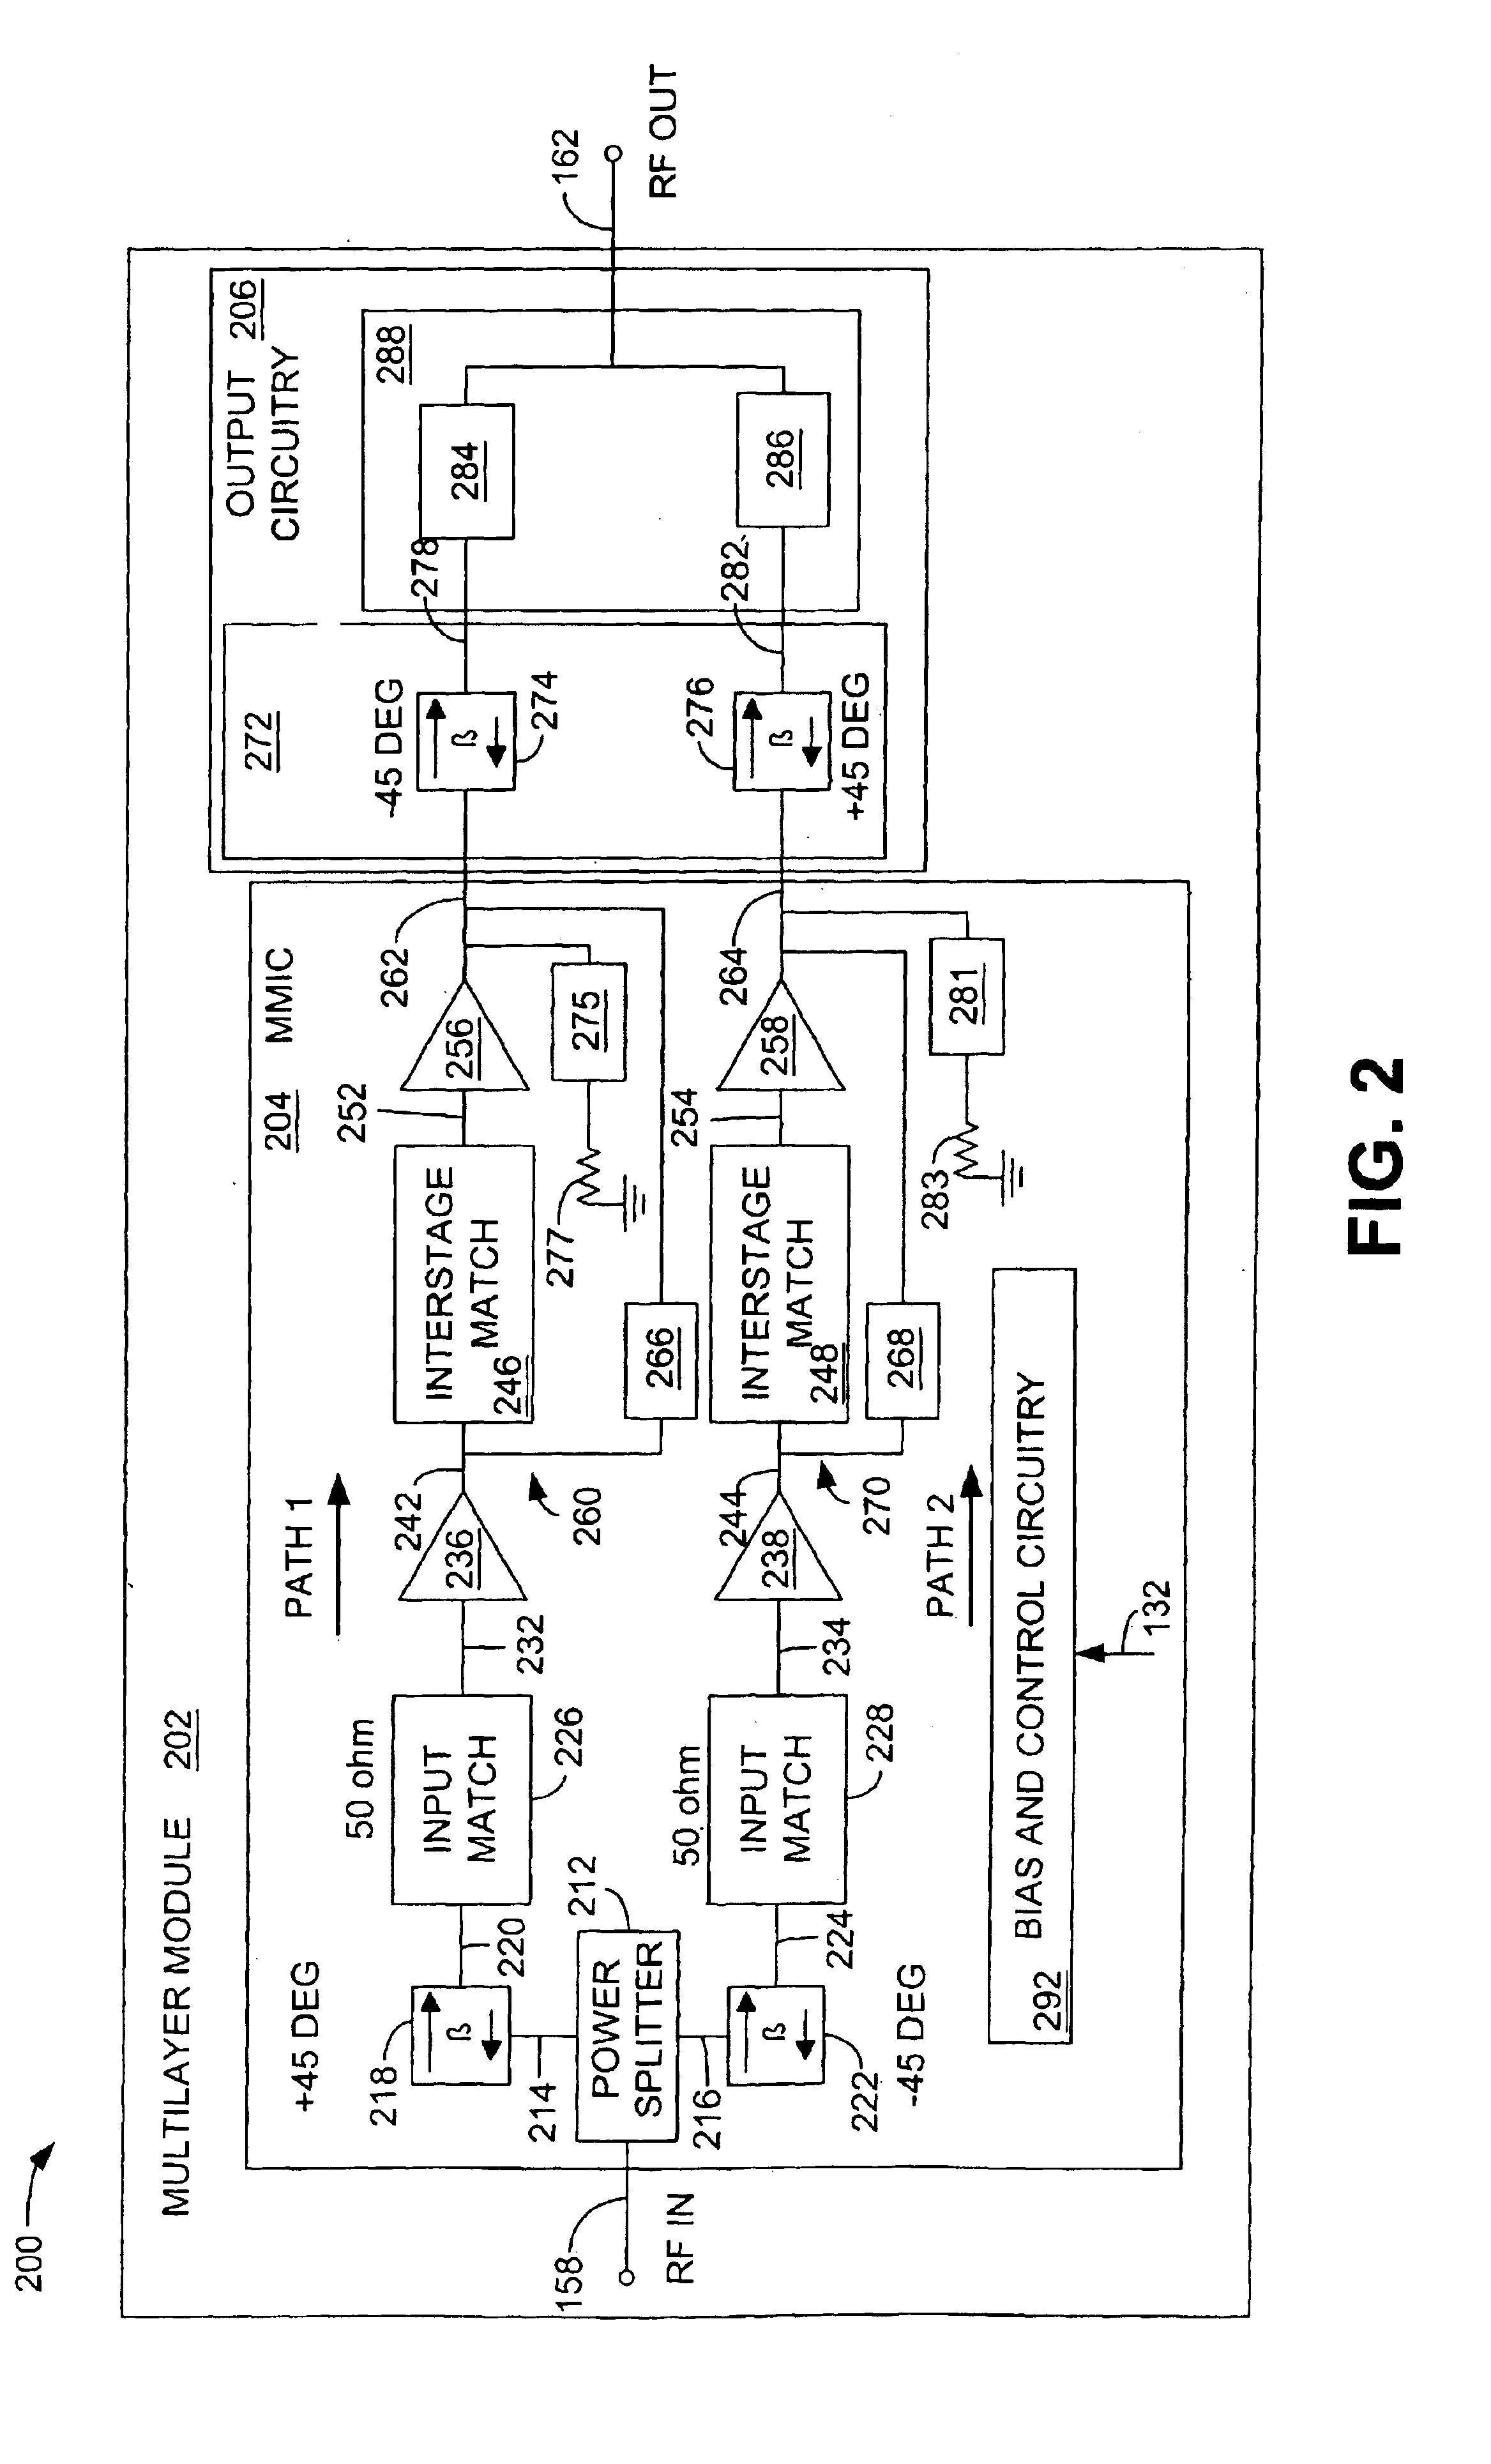 Load variation tolerant radio frequency (RF) amplifier